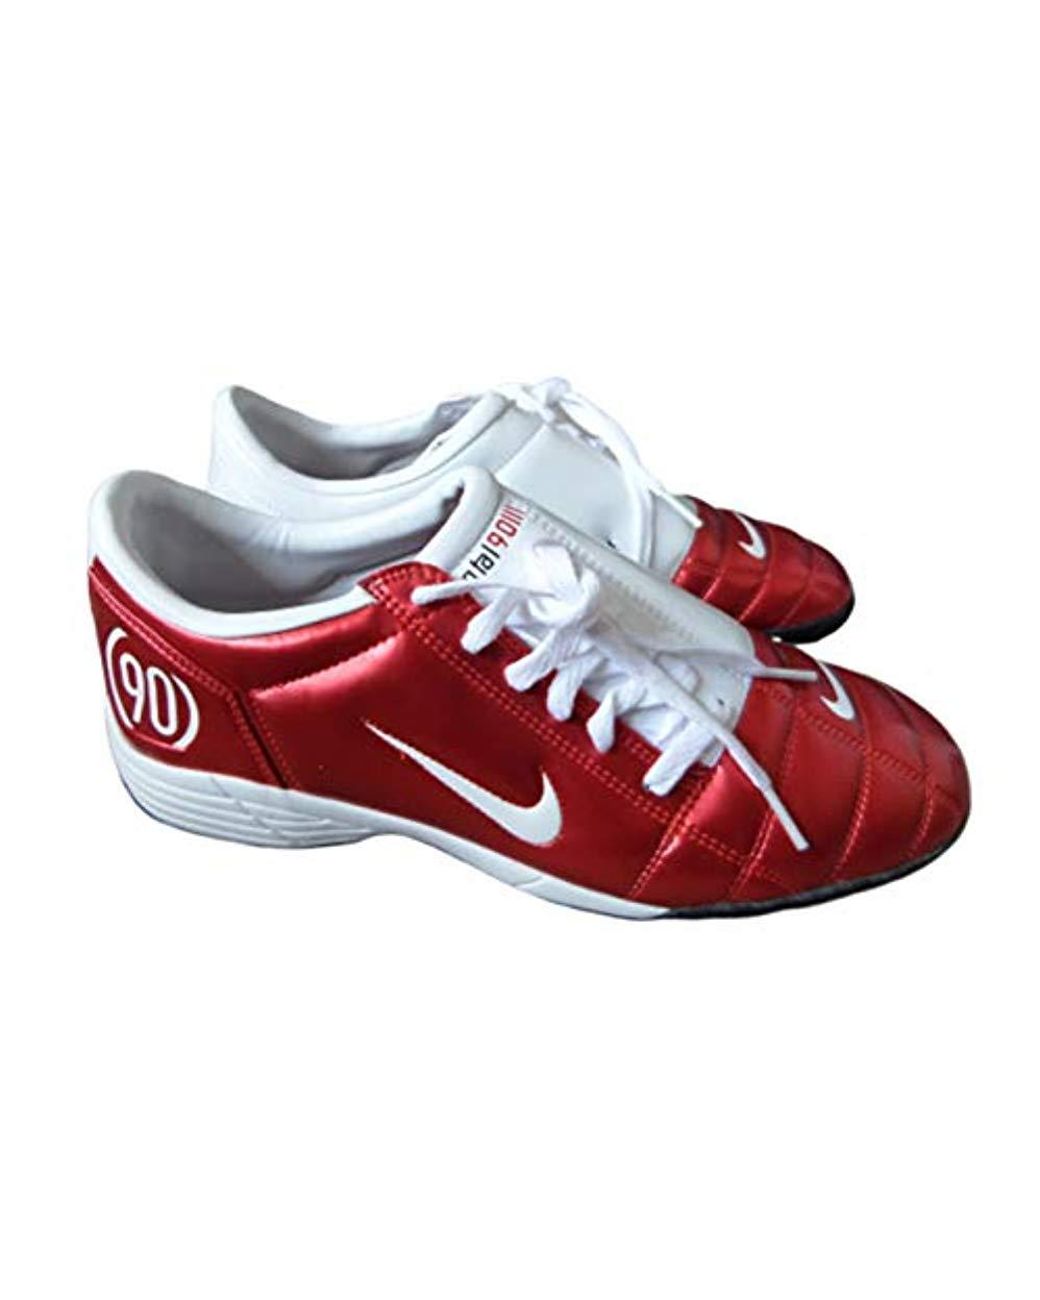 Nike Total 90 Iii Tf Plus Astro Turf Football Trainers Original 2005 ...